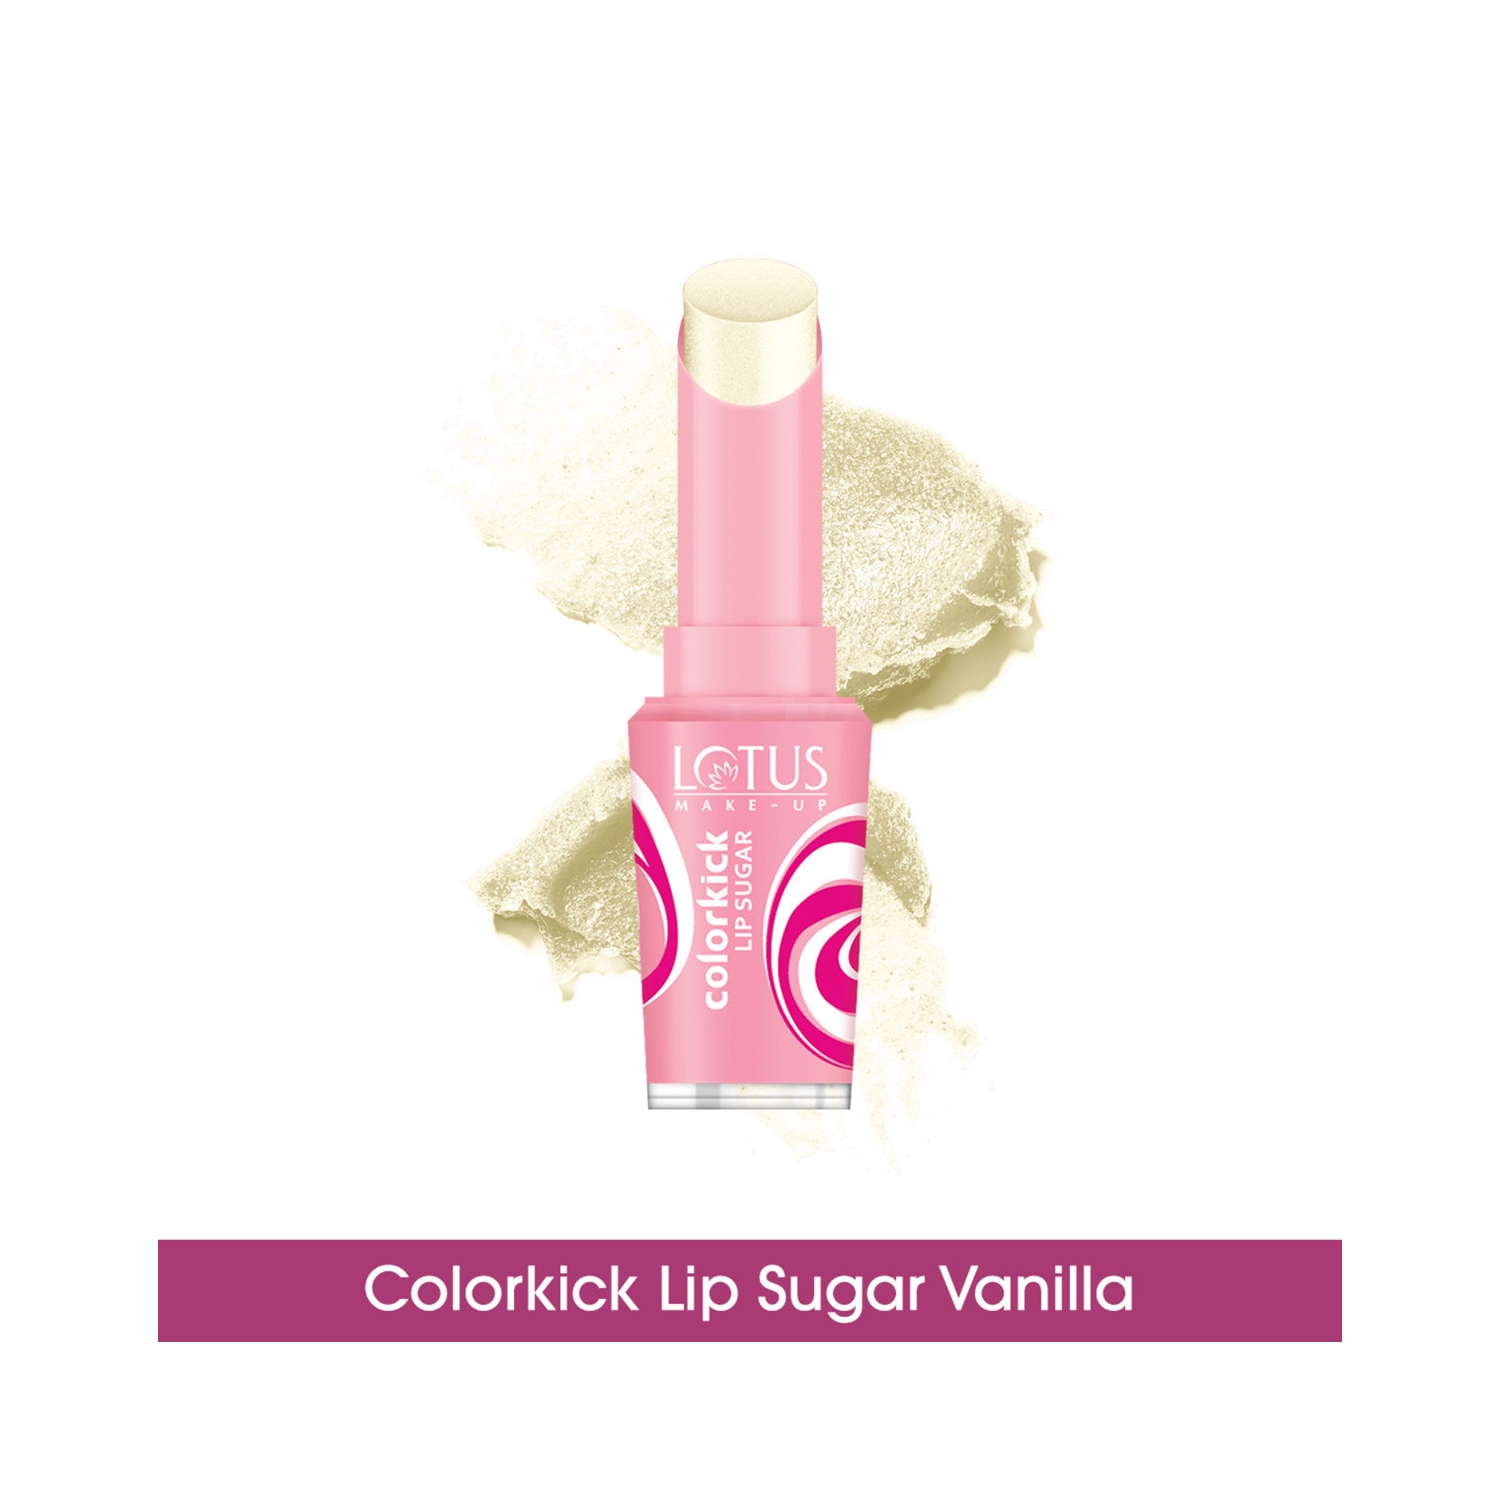 Lotus | Lotus Makeup Colorkick Lip Sugar SPF 20 - S6 Vanilla (3g)